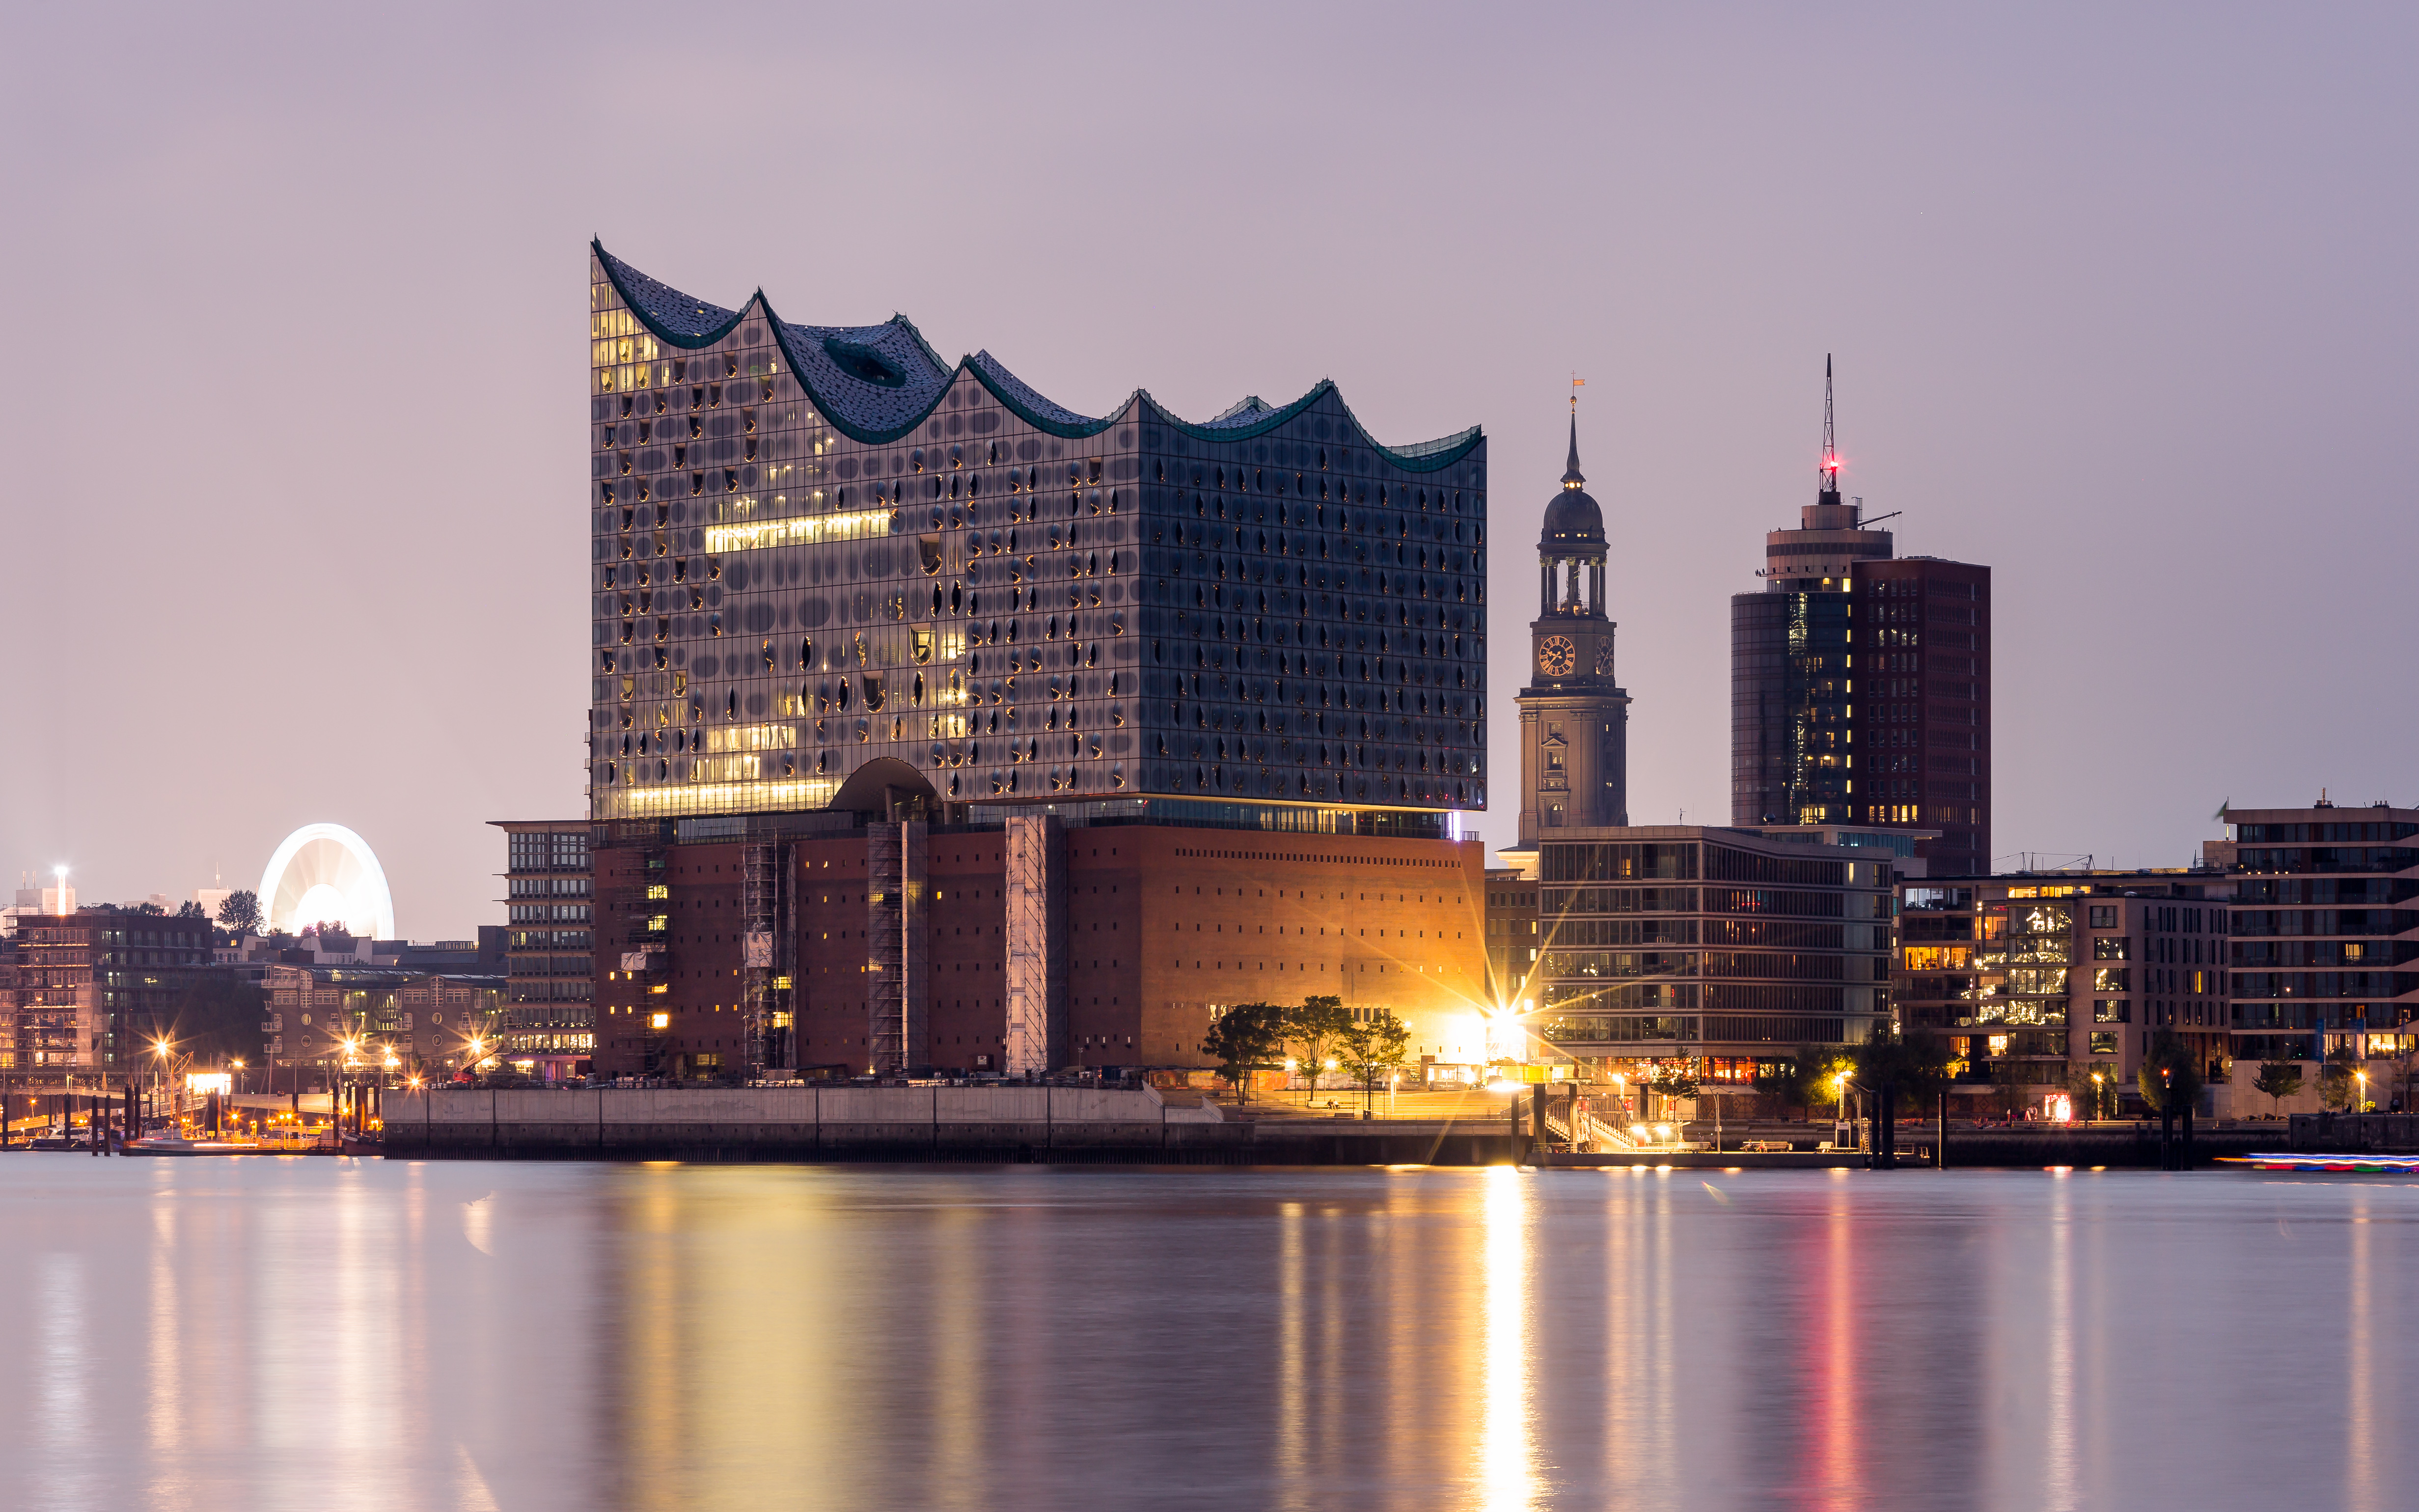 Photo of the Elbphilharmonie in Hamburg City with many city lights